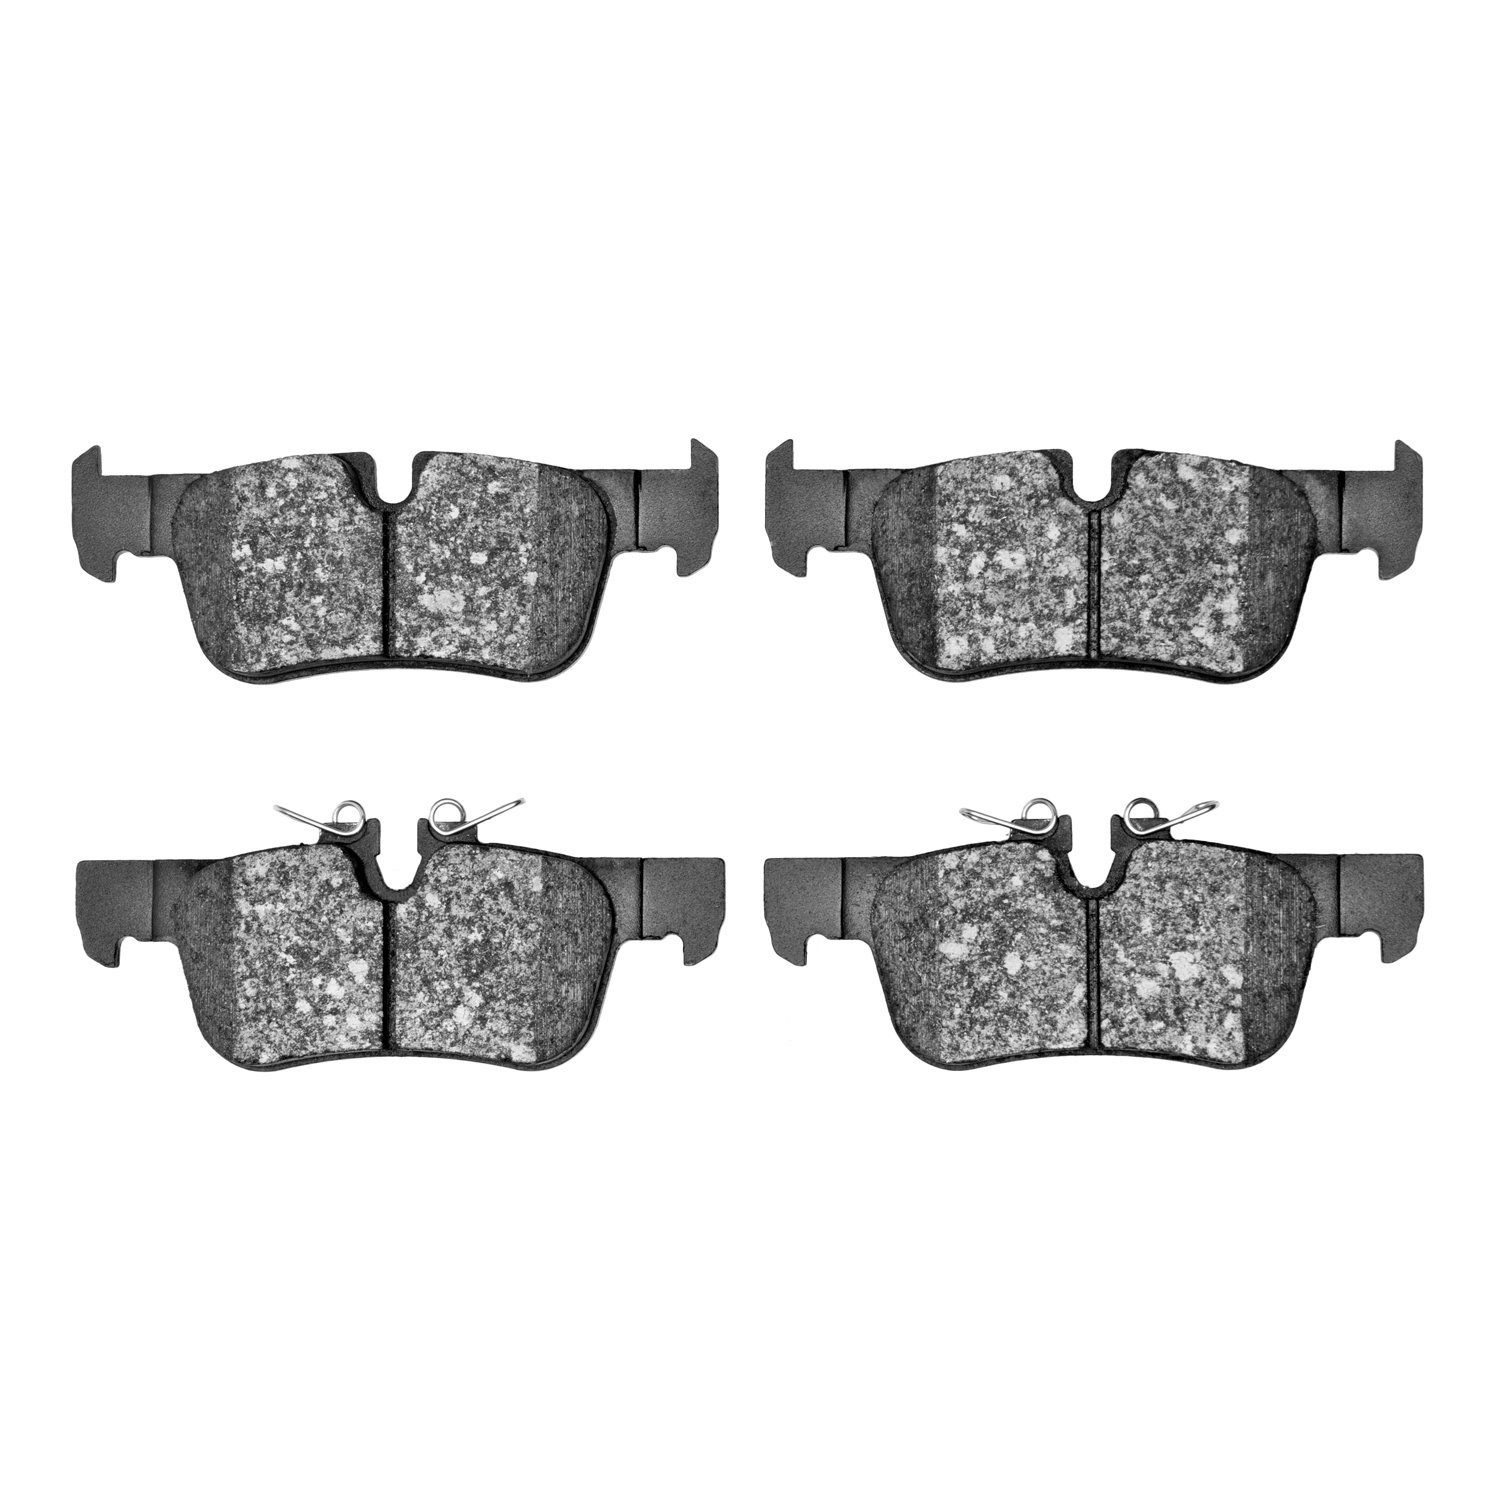 1310-1762-00 3000-Series Ceramic Brake Pads, Fits Select Multiple Makes/Models, Position: Rear